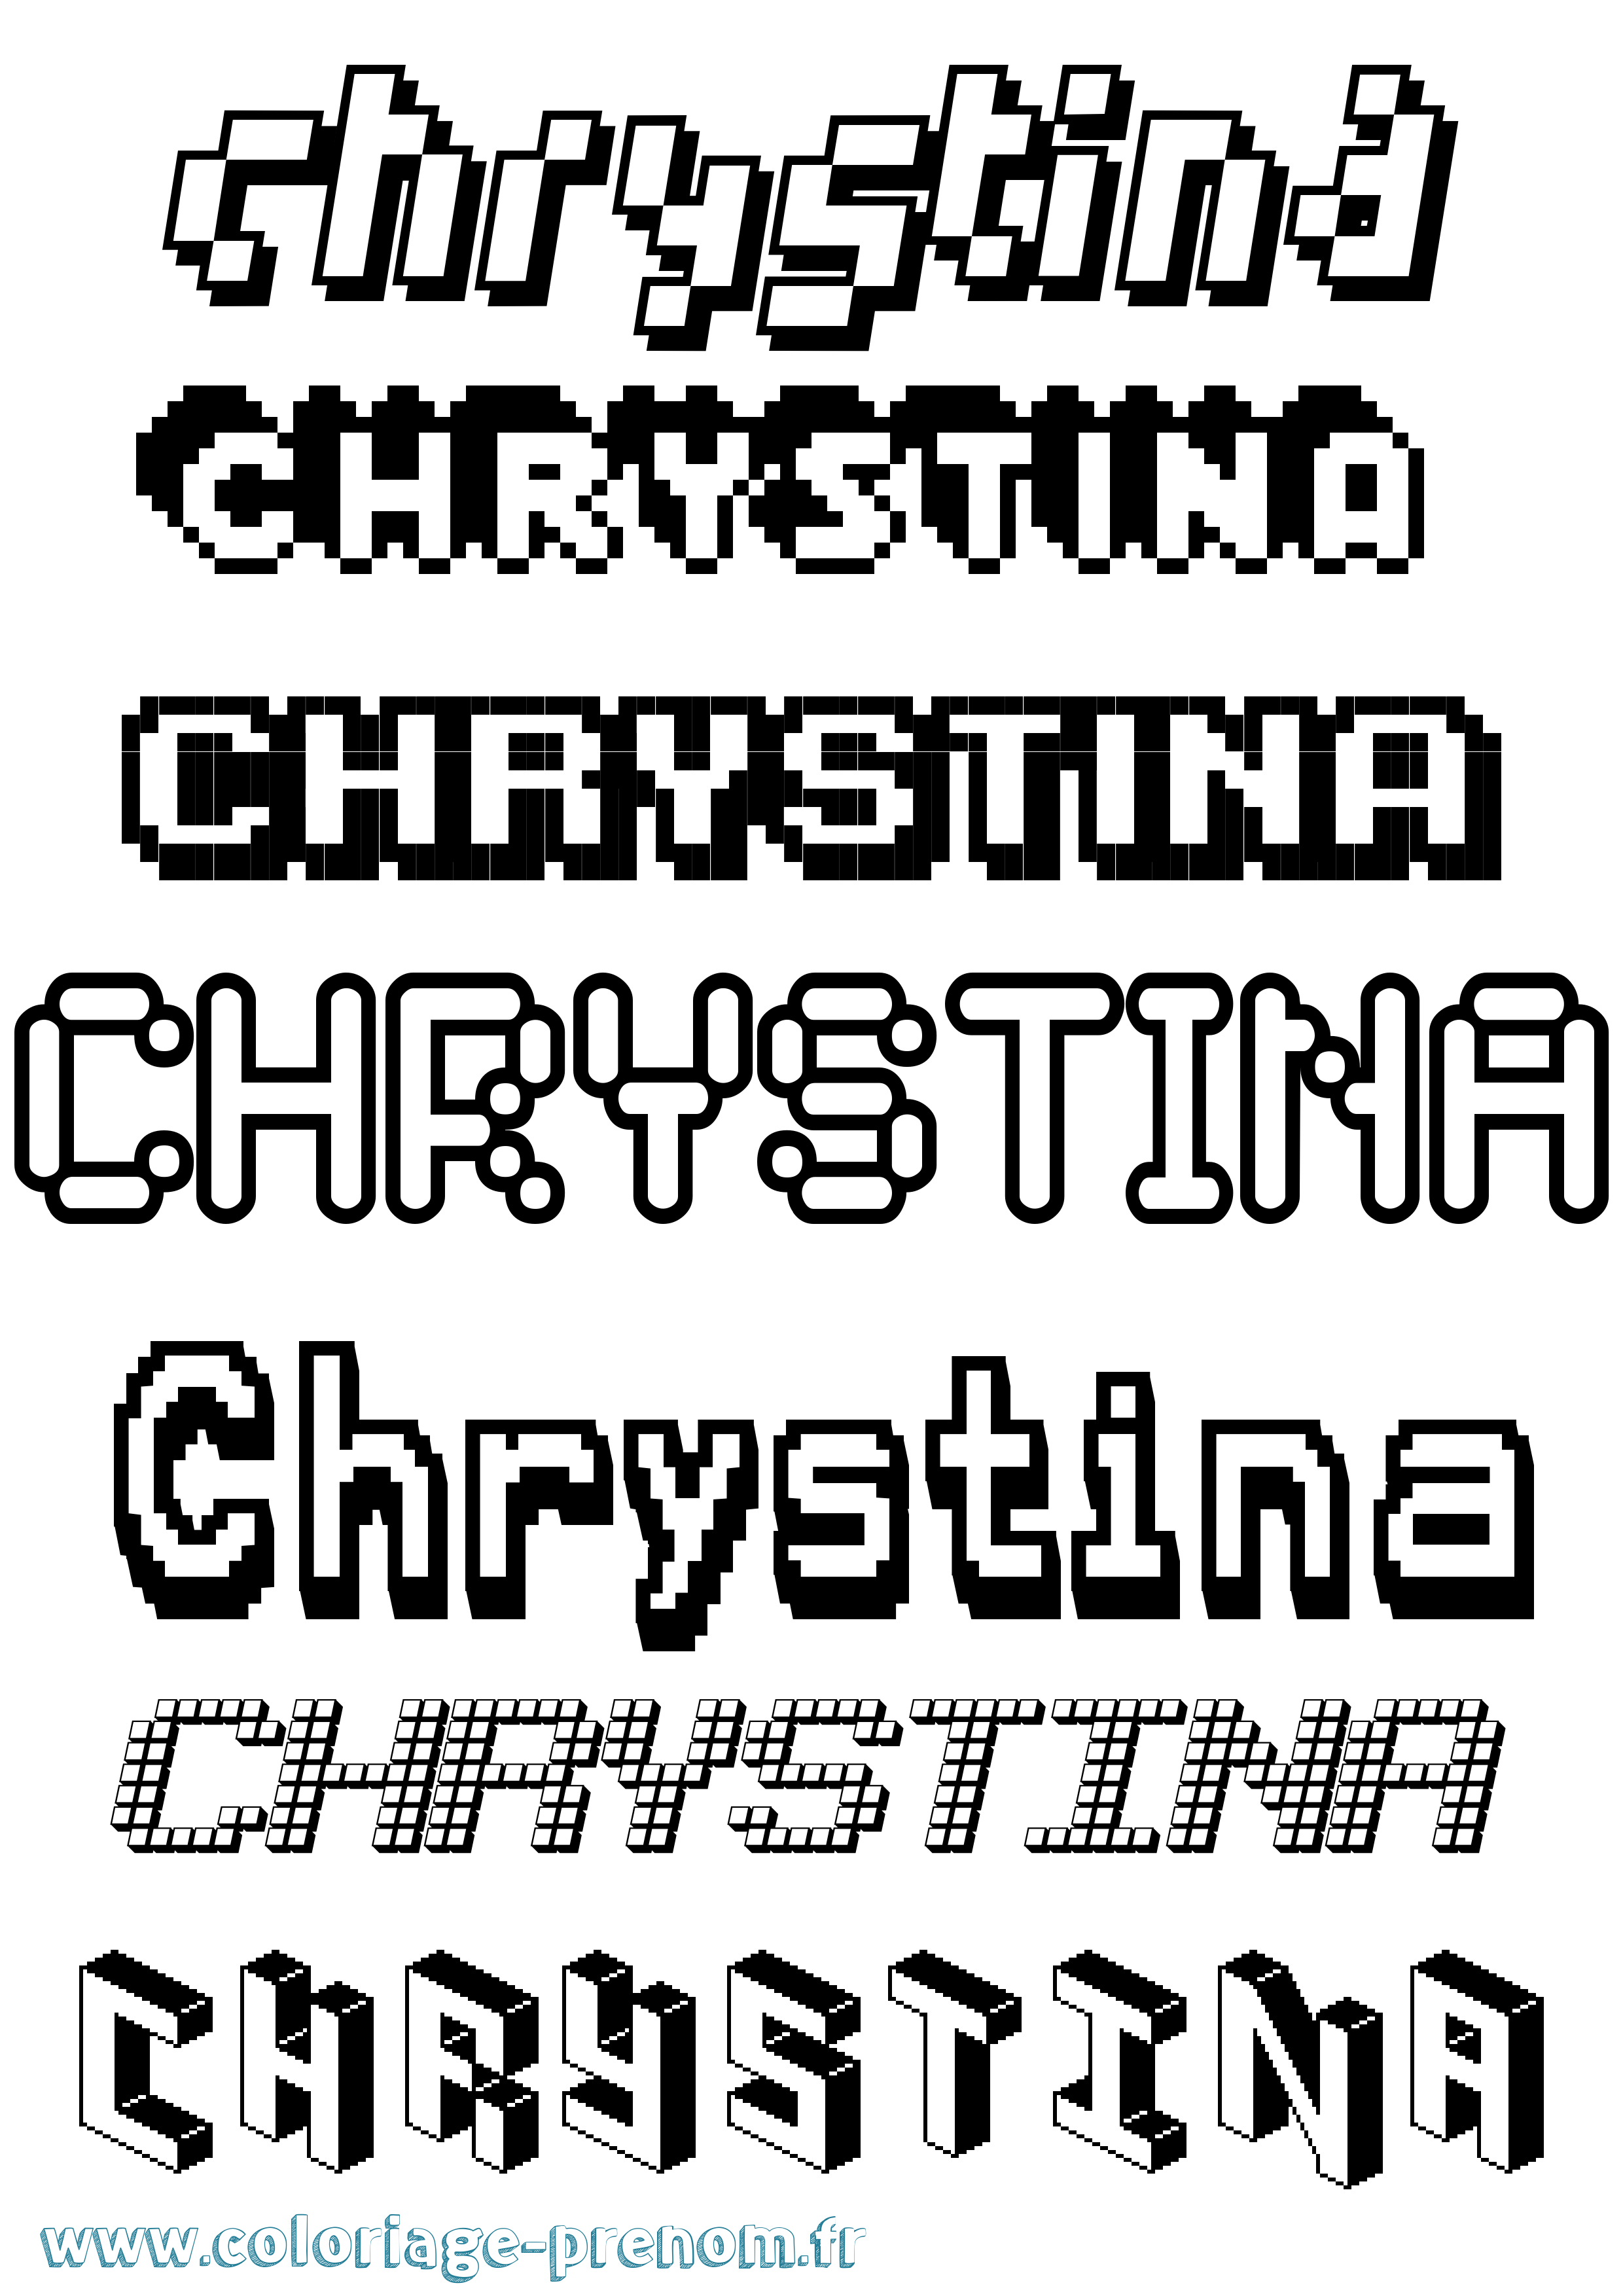 Coloriage prénom Chrystina Pixel